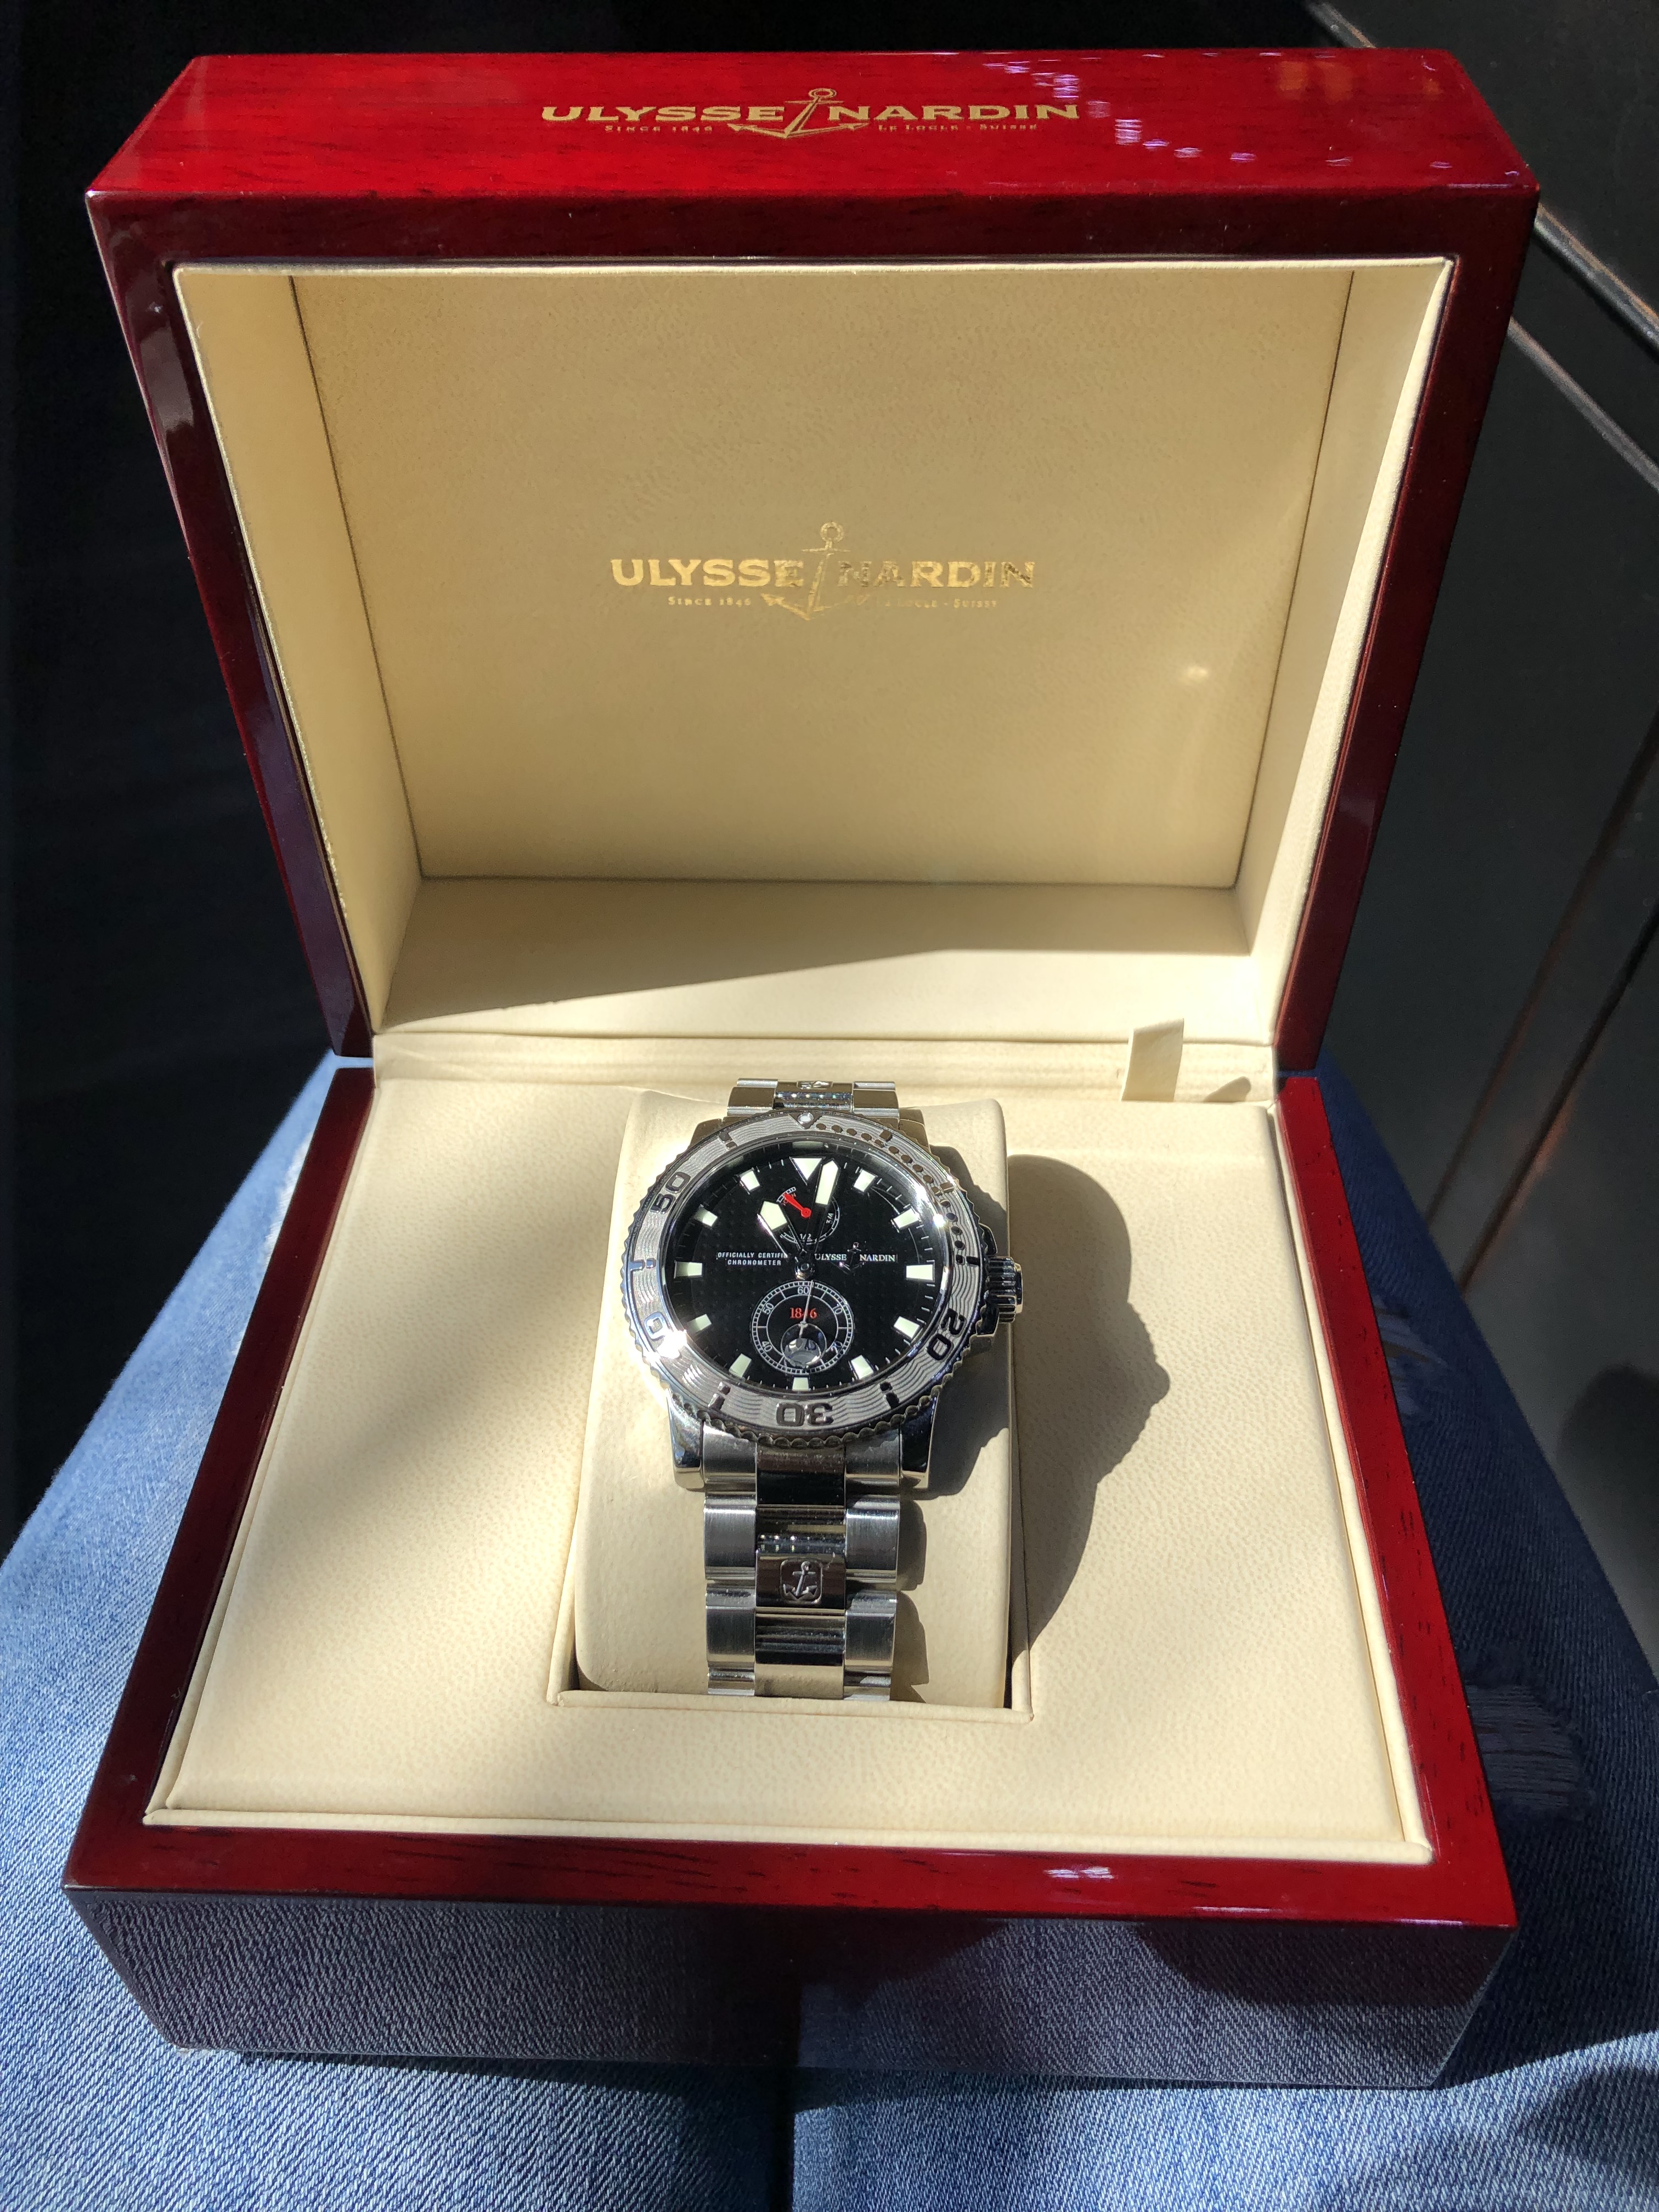 nardin ulysse marine chronometer watch in box